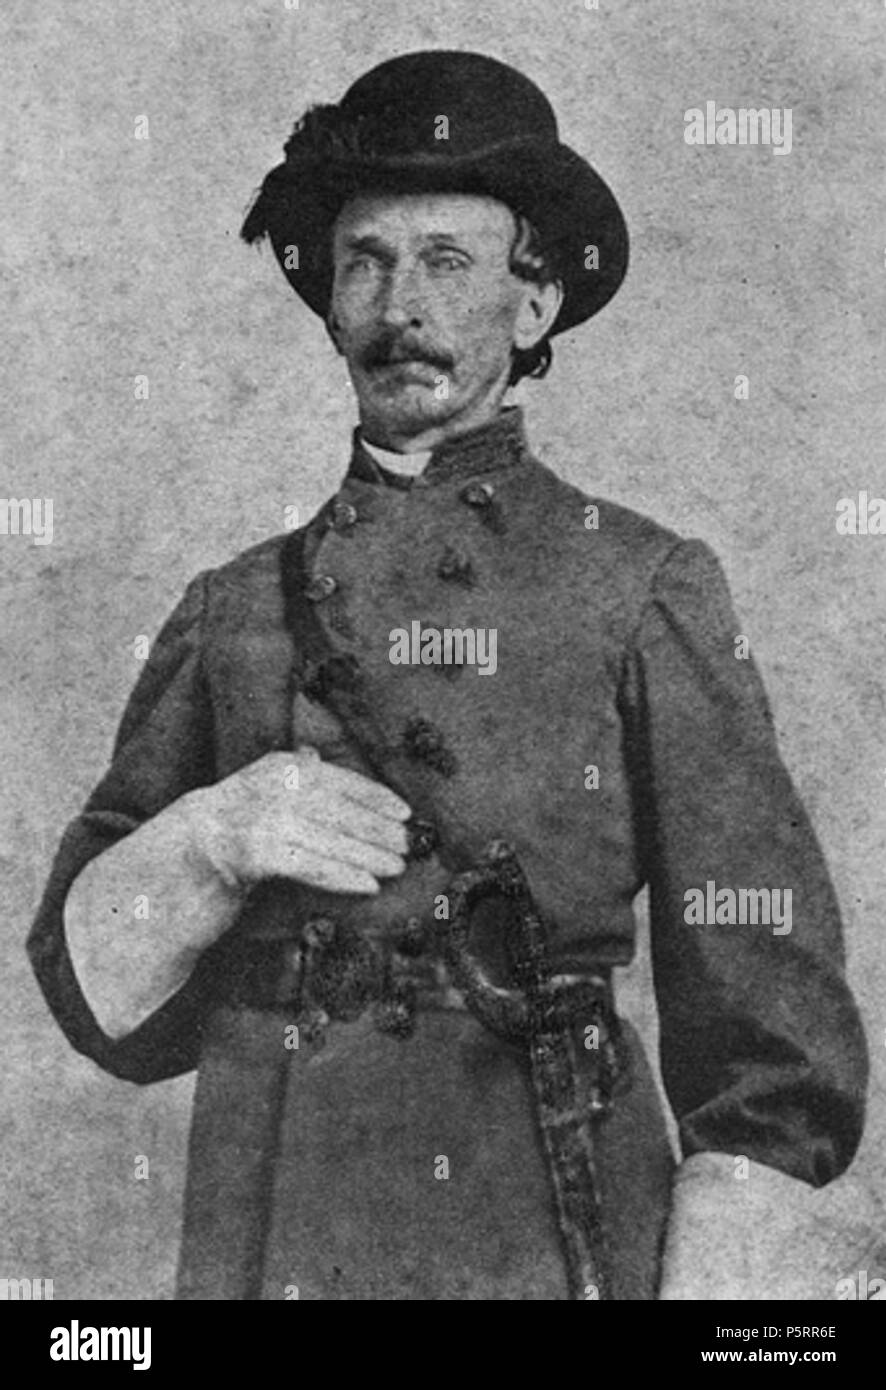 N/A. Inglés: Retrato del Capitán Confederado John Jackson Dickison, adoptado en 1864. 8 de junio de 2011, 19:06 (UTC). 269 desconocido capitán John J. Dickison Foto de stock